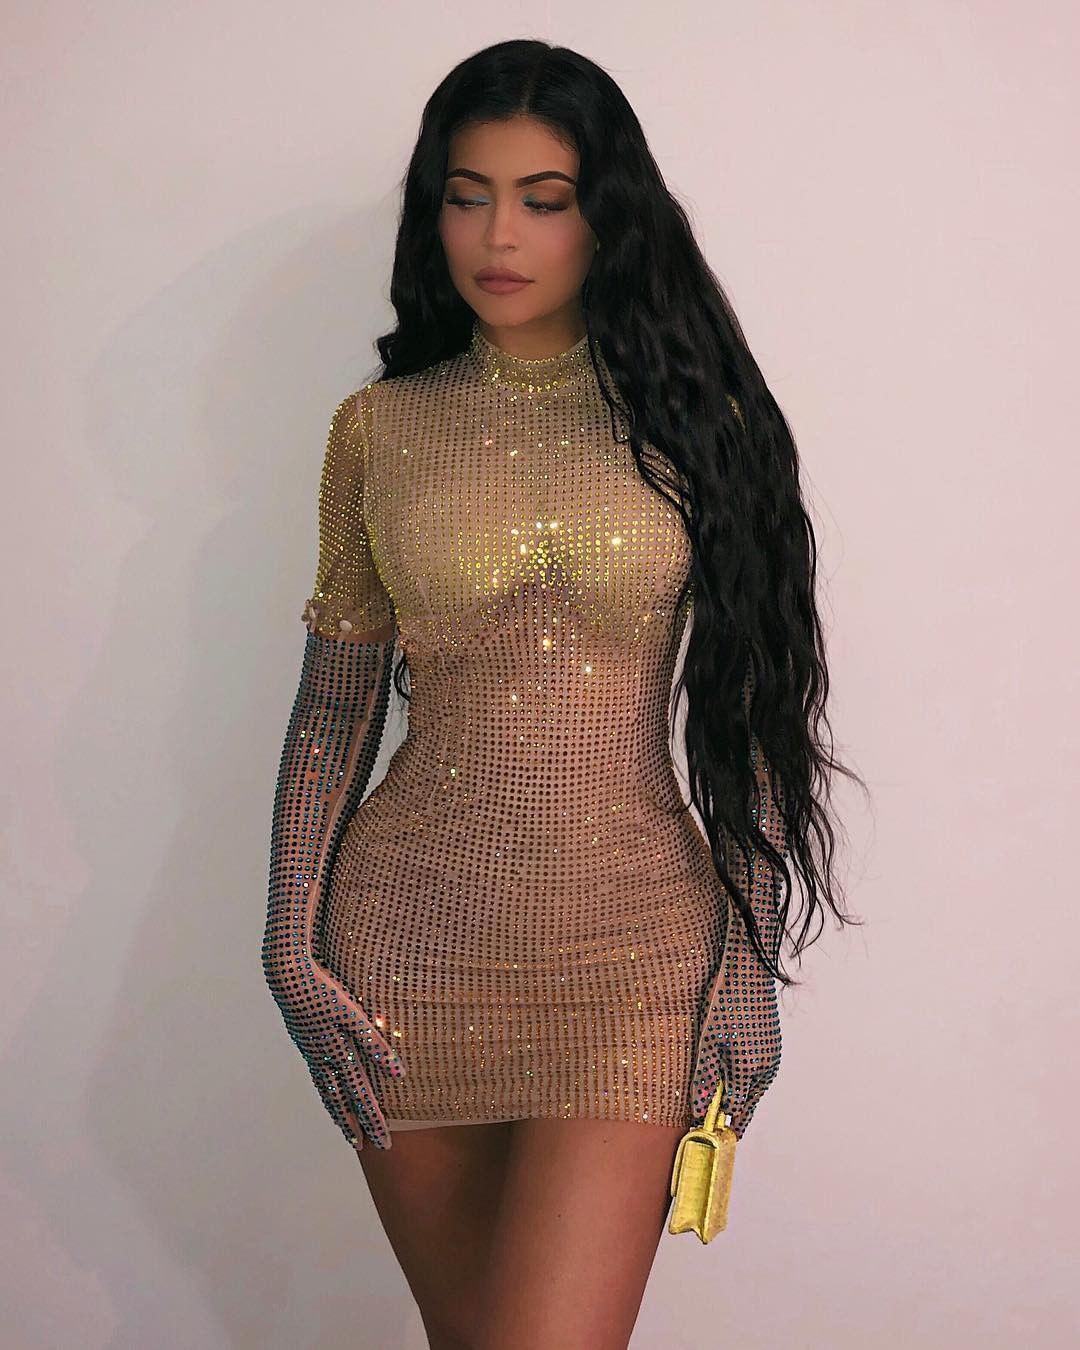 Lindas imágenes de Kylie Jenner de cuerpo completo de Instagram